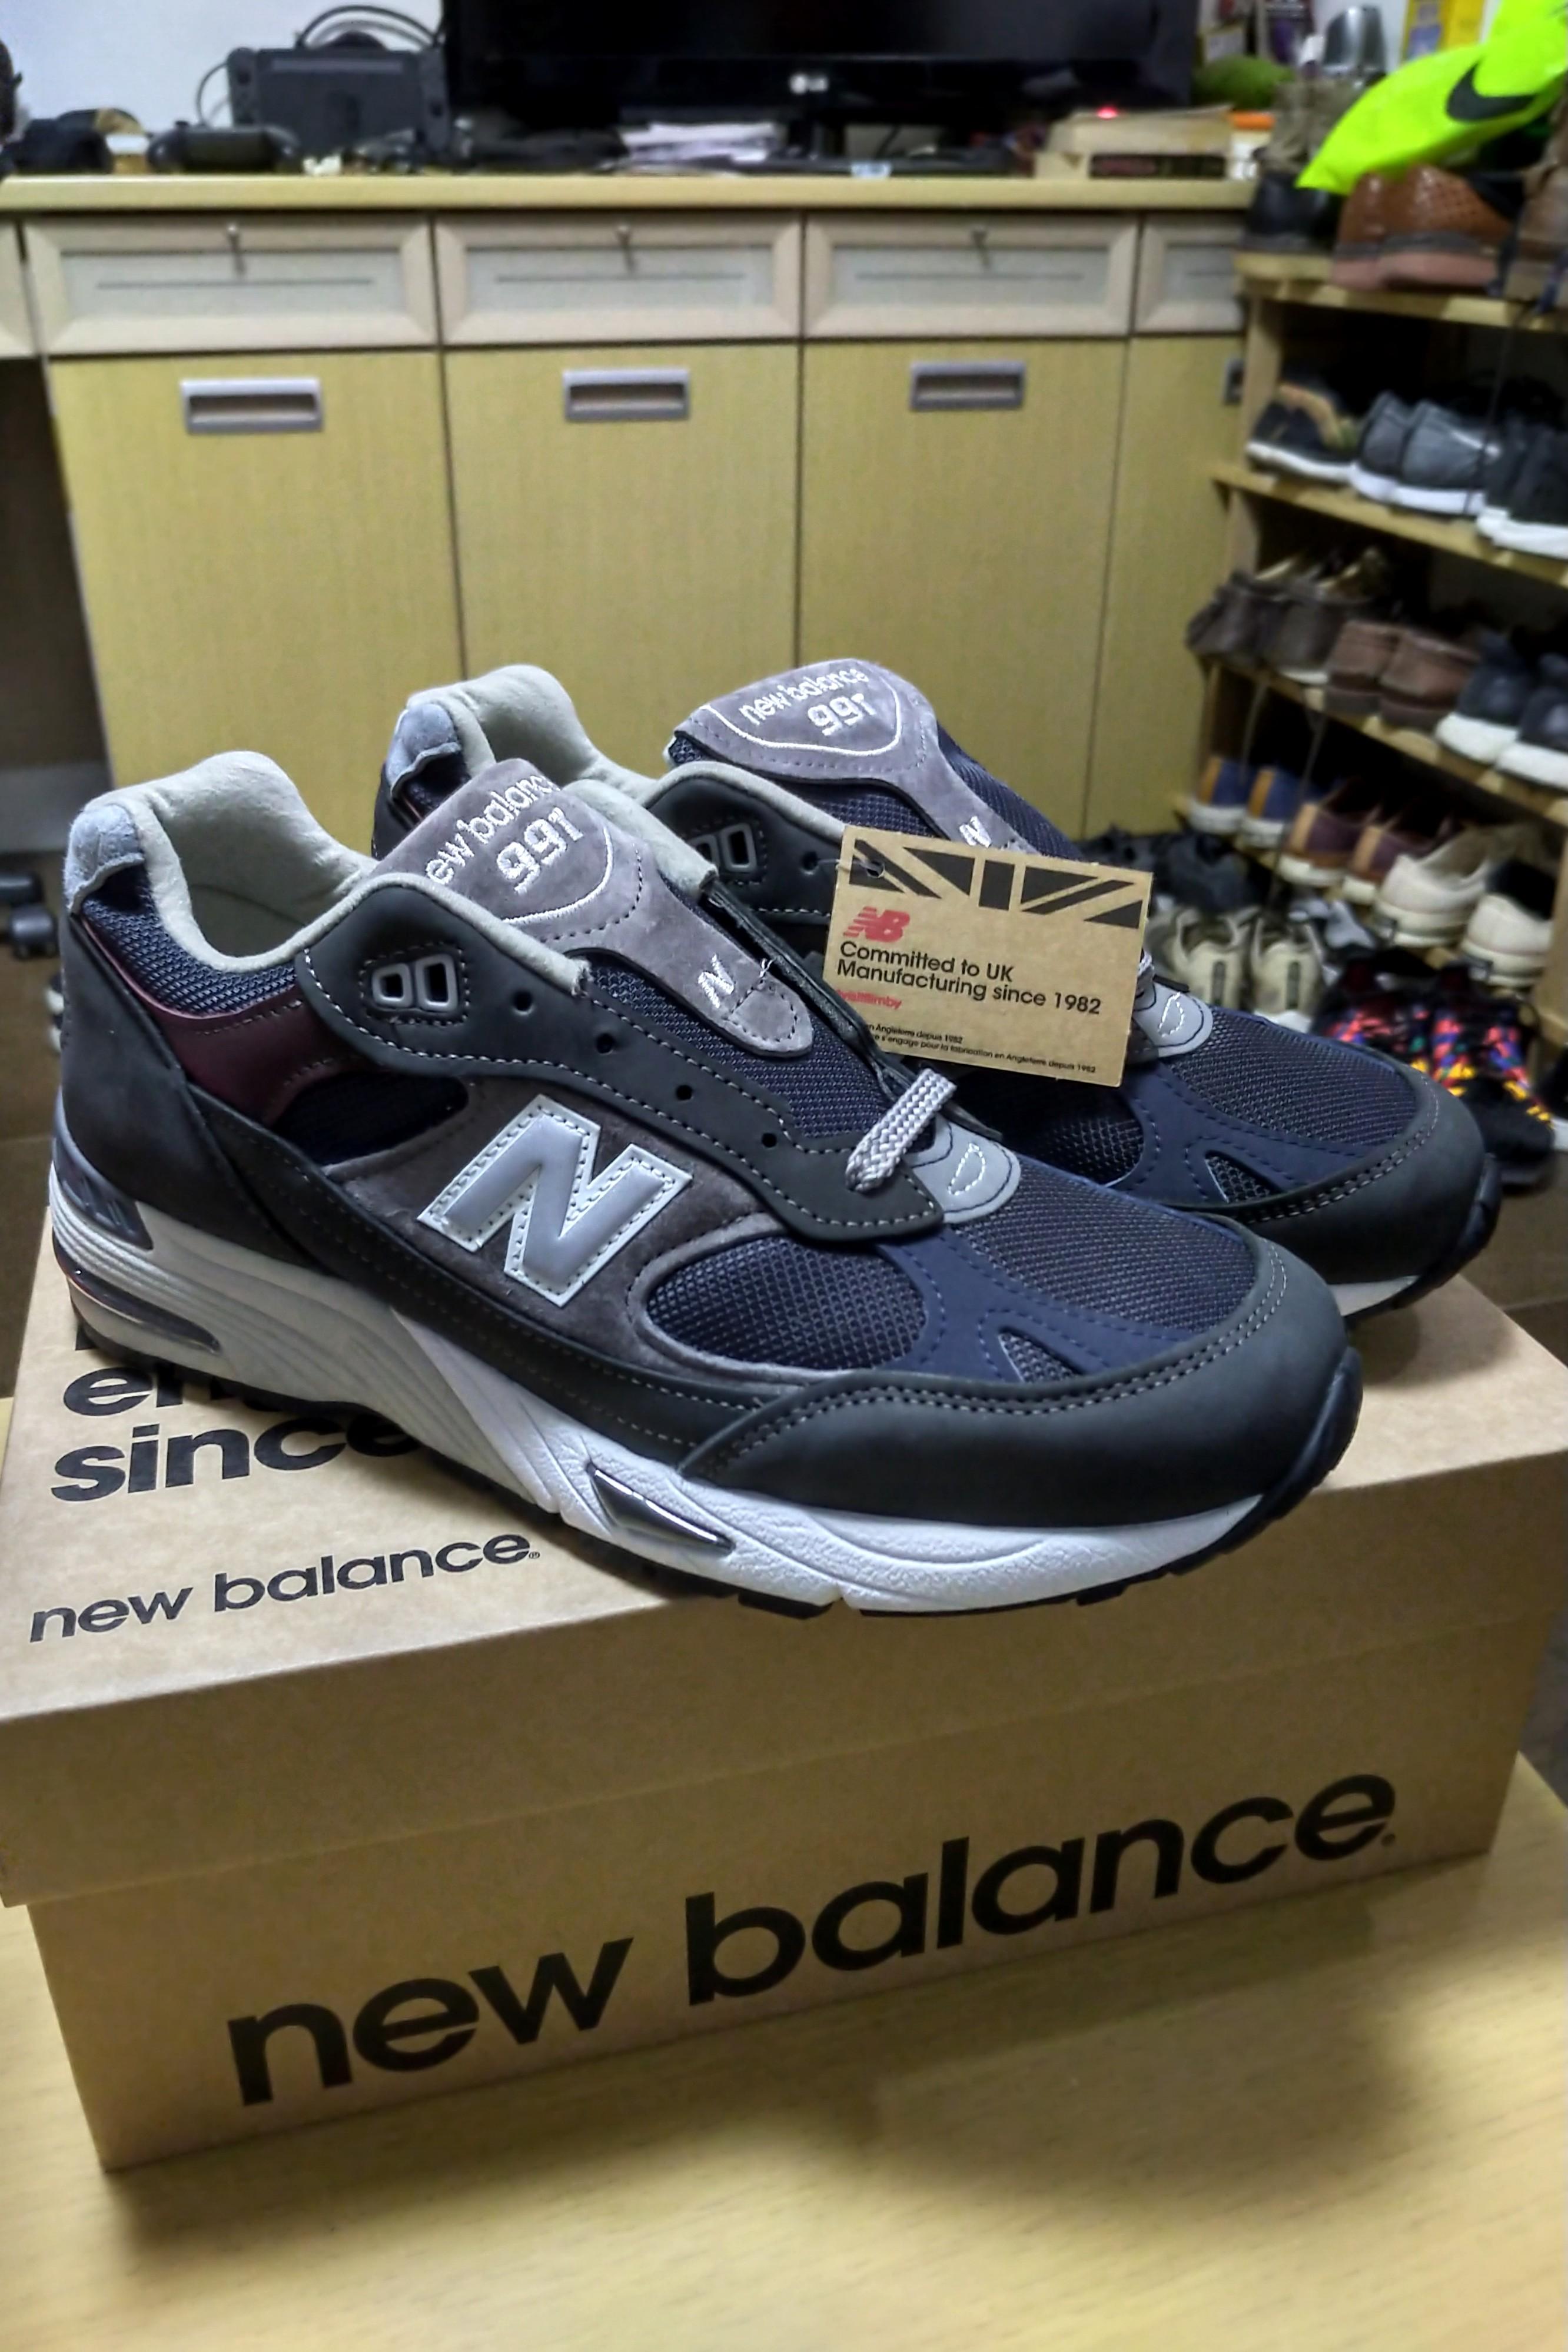 New balance 991 990 GNN US7.5 made in UK, Men's Fashion, Men's Footwear